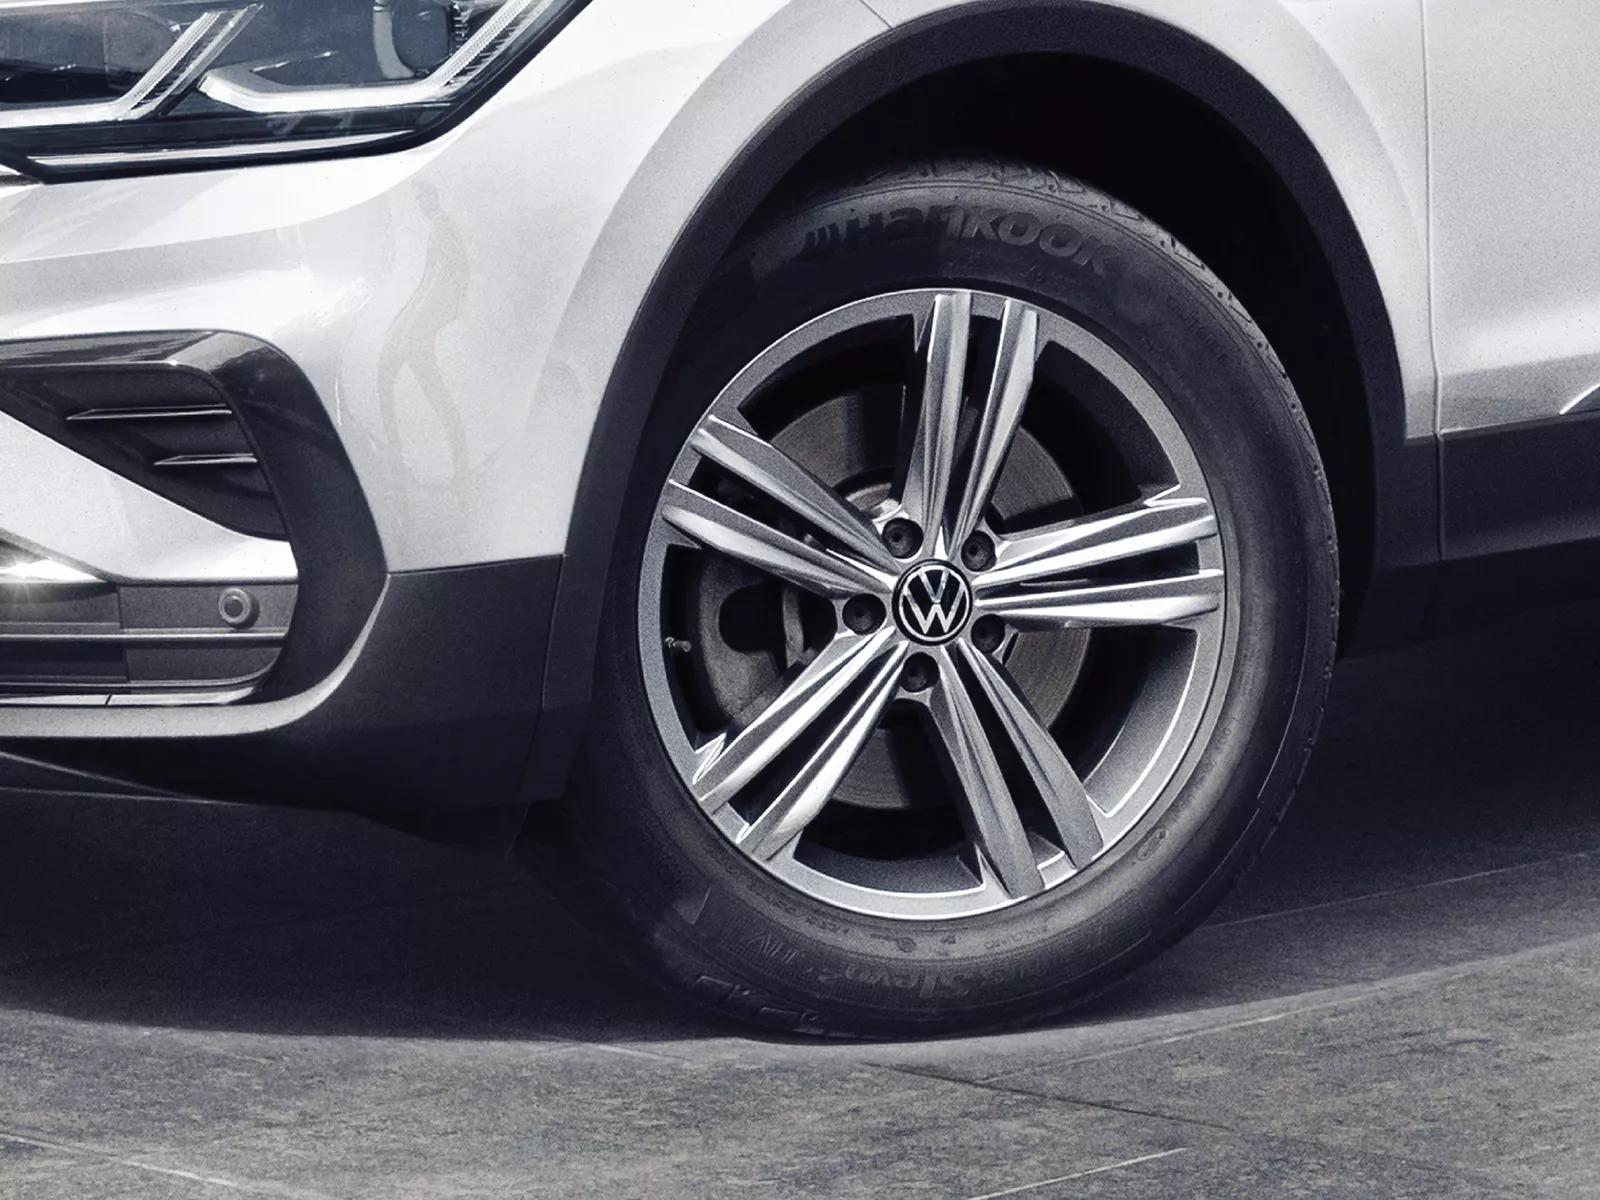 Volkswagen Tiguan Exclusive Edition Petrol - New 45.72 cms (18) Sebring Alloy wheels